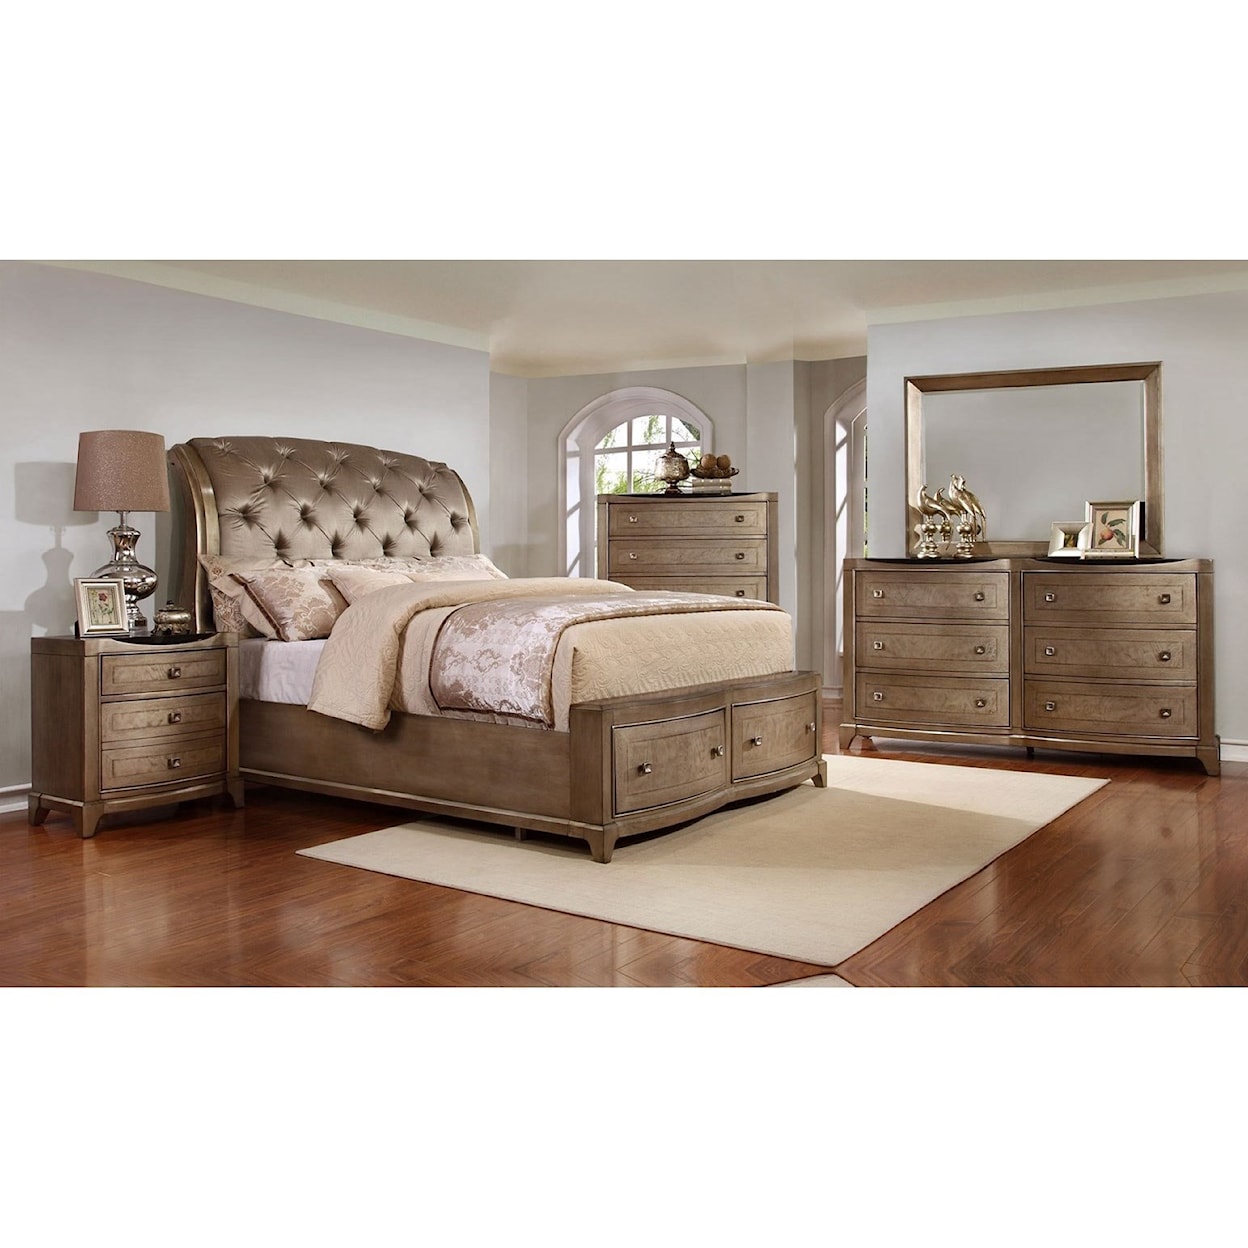 Avalon Furniture Uptown King Bedroom Group